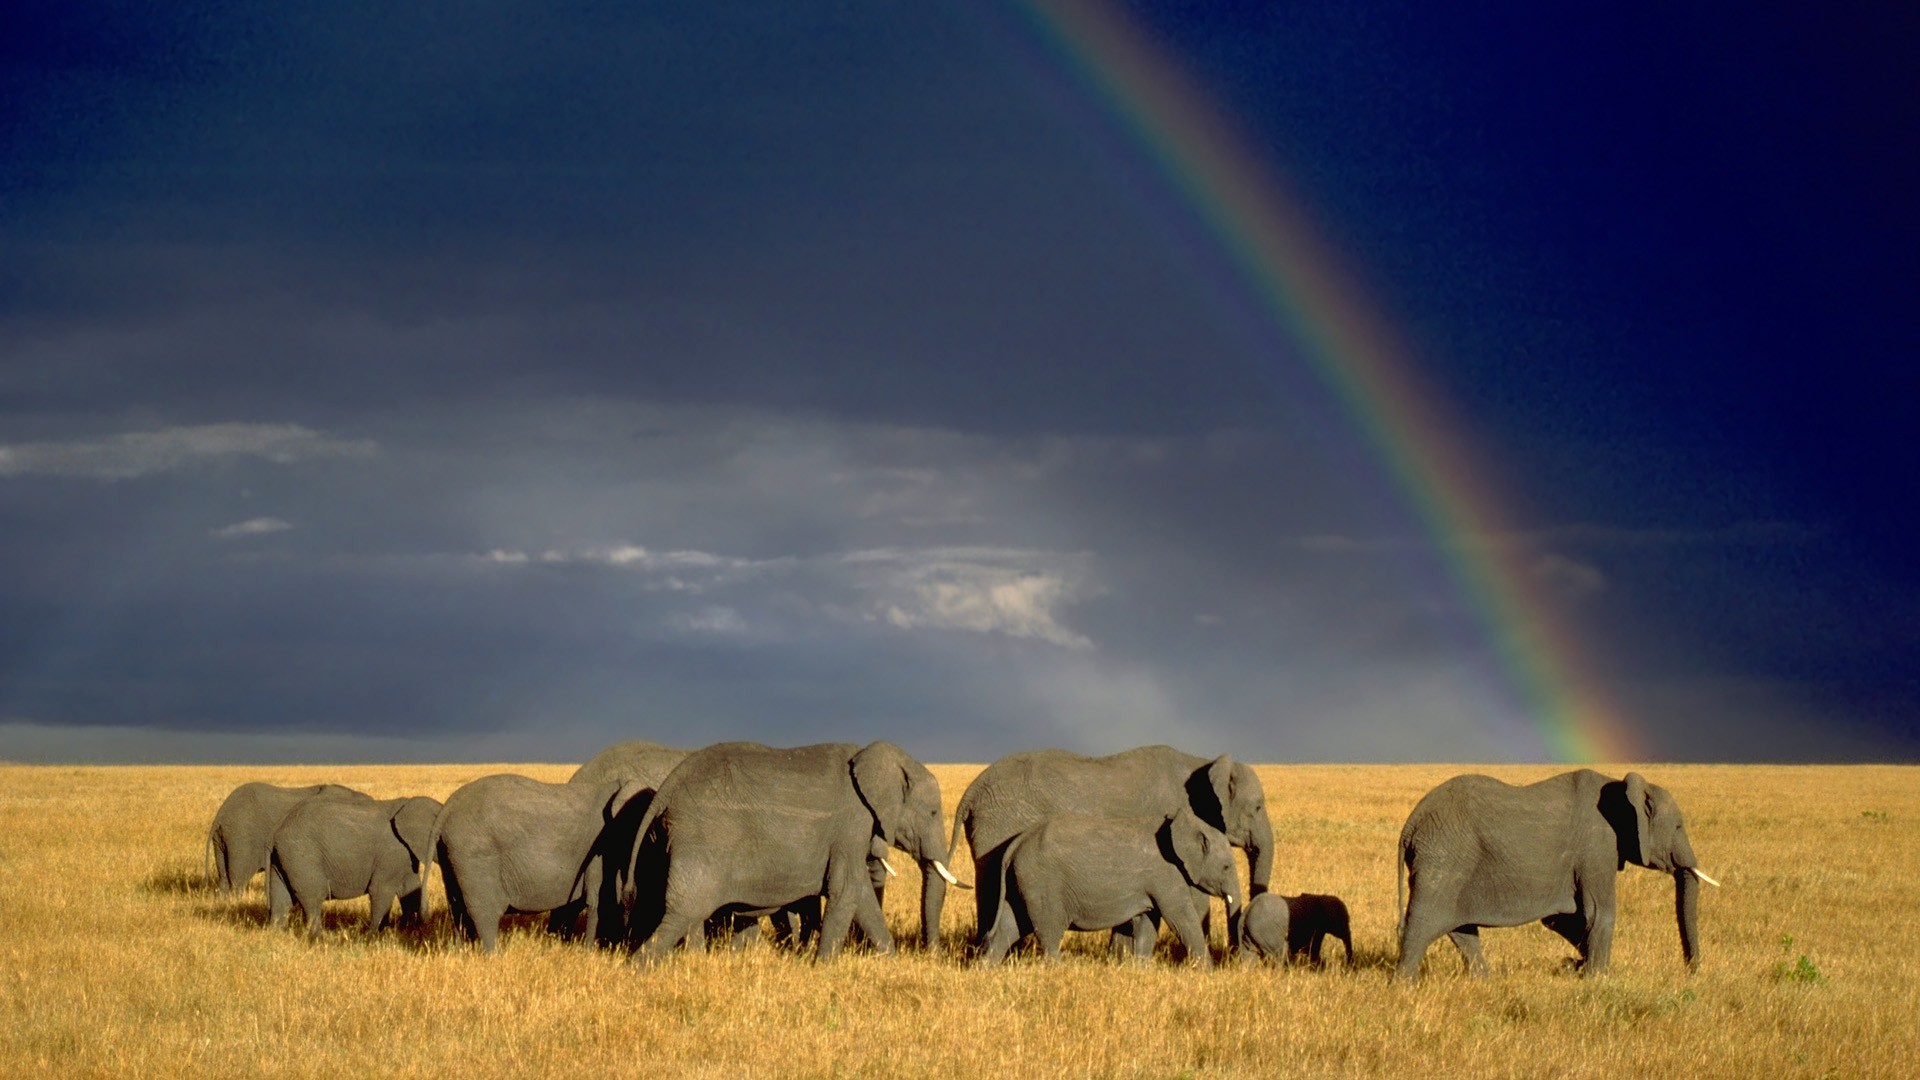 General 1920x1080 nature landscape animals wildlife elephant savannah mammals sky rainbows